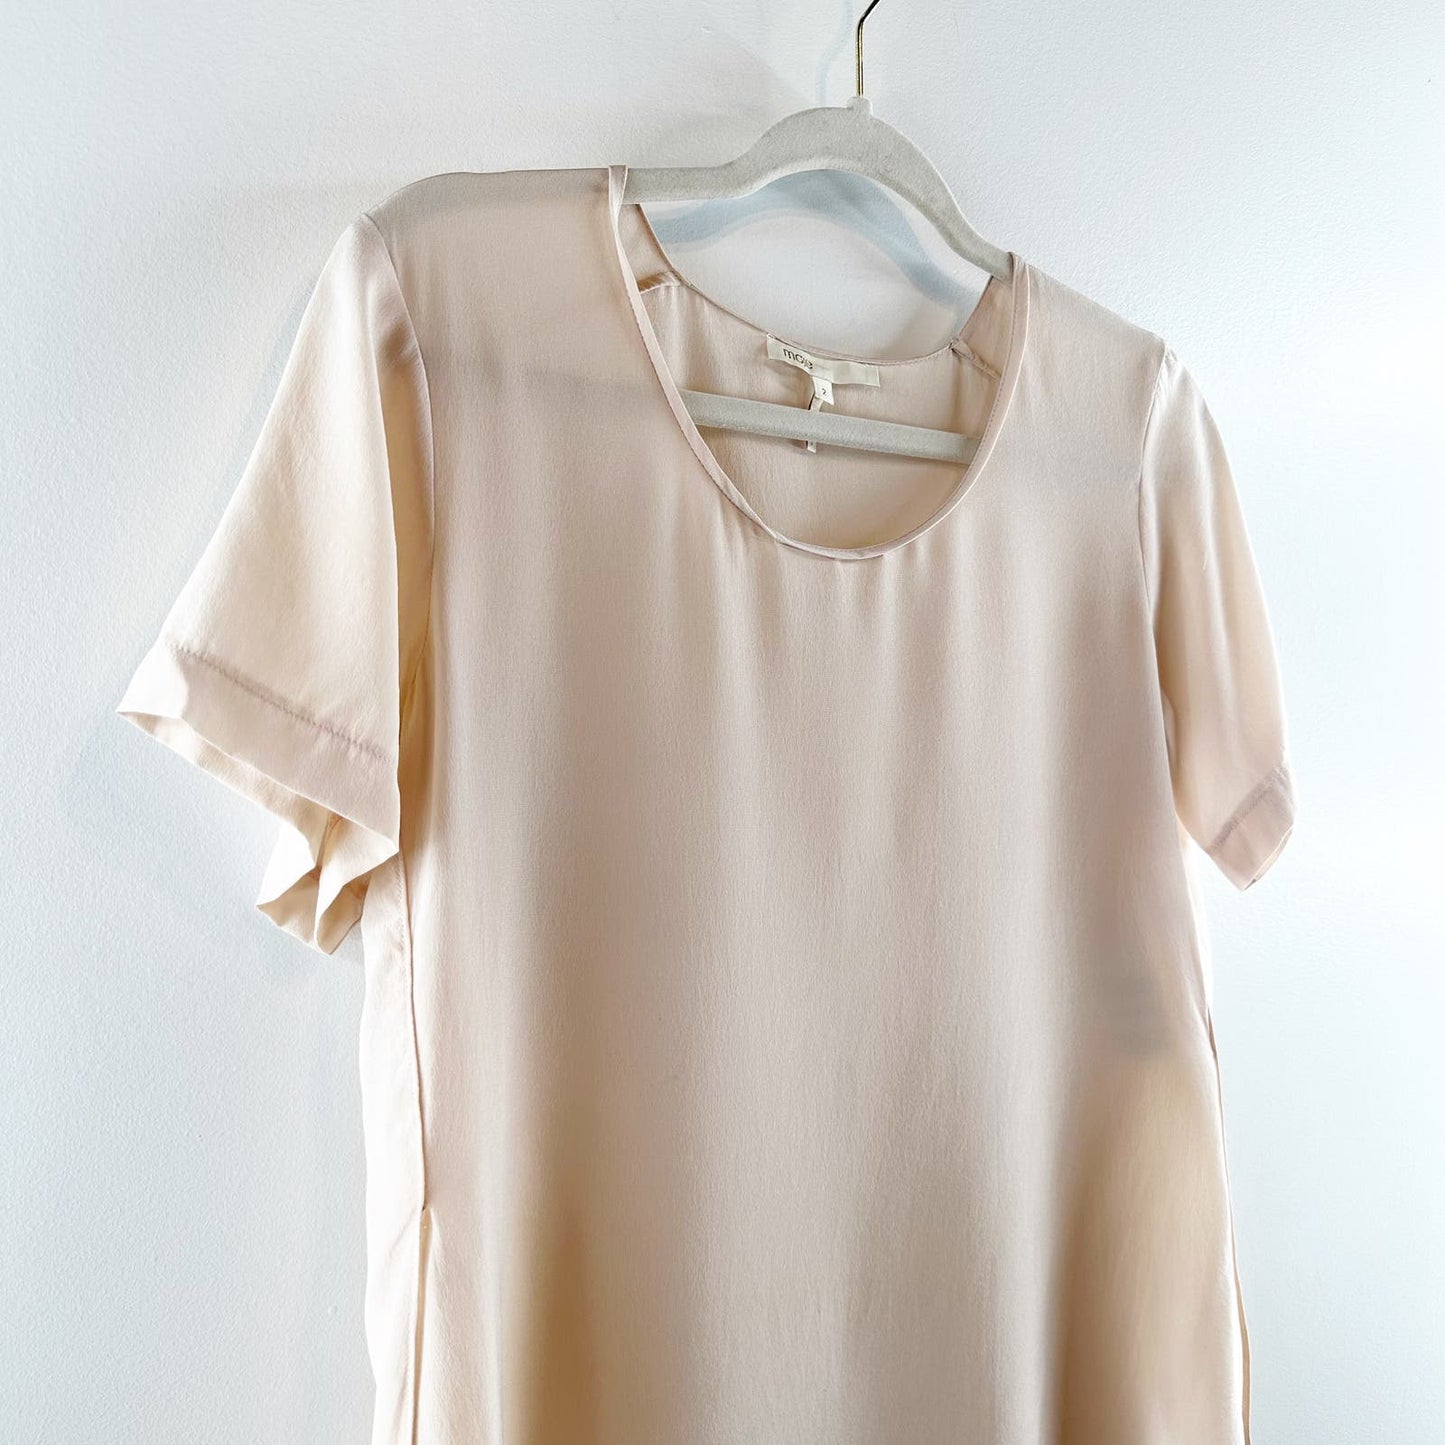 Maje 100% Silk Short Sleeve Split Slit Hem Blouse Shirt Top Pink 2